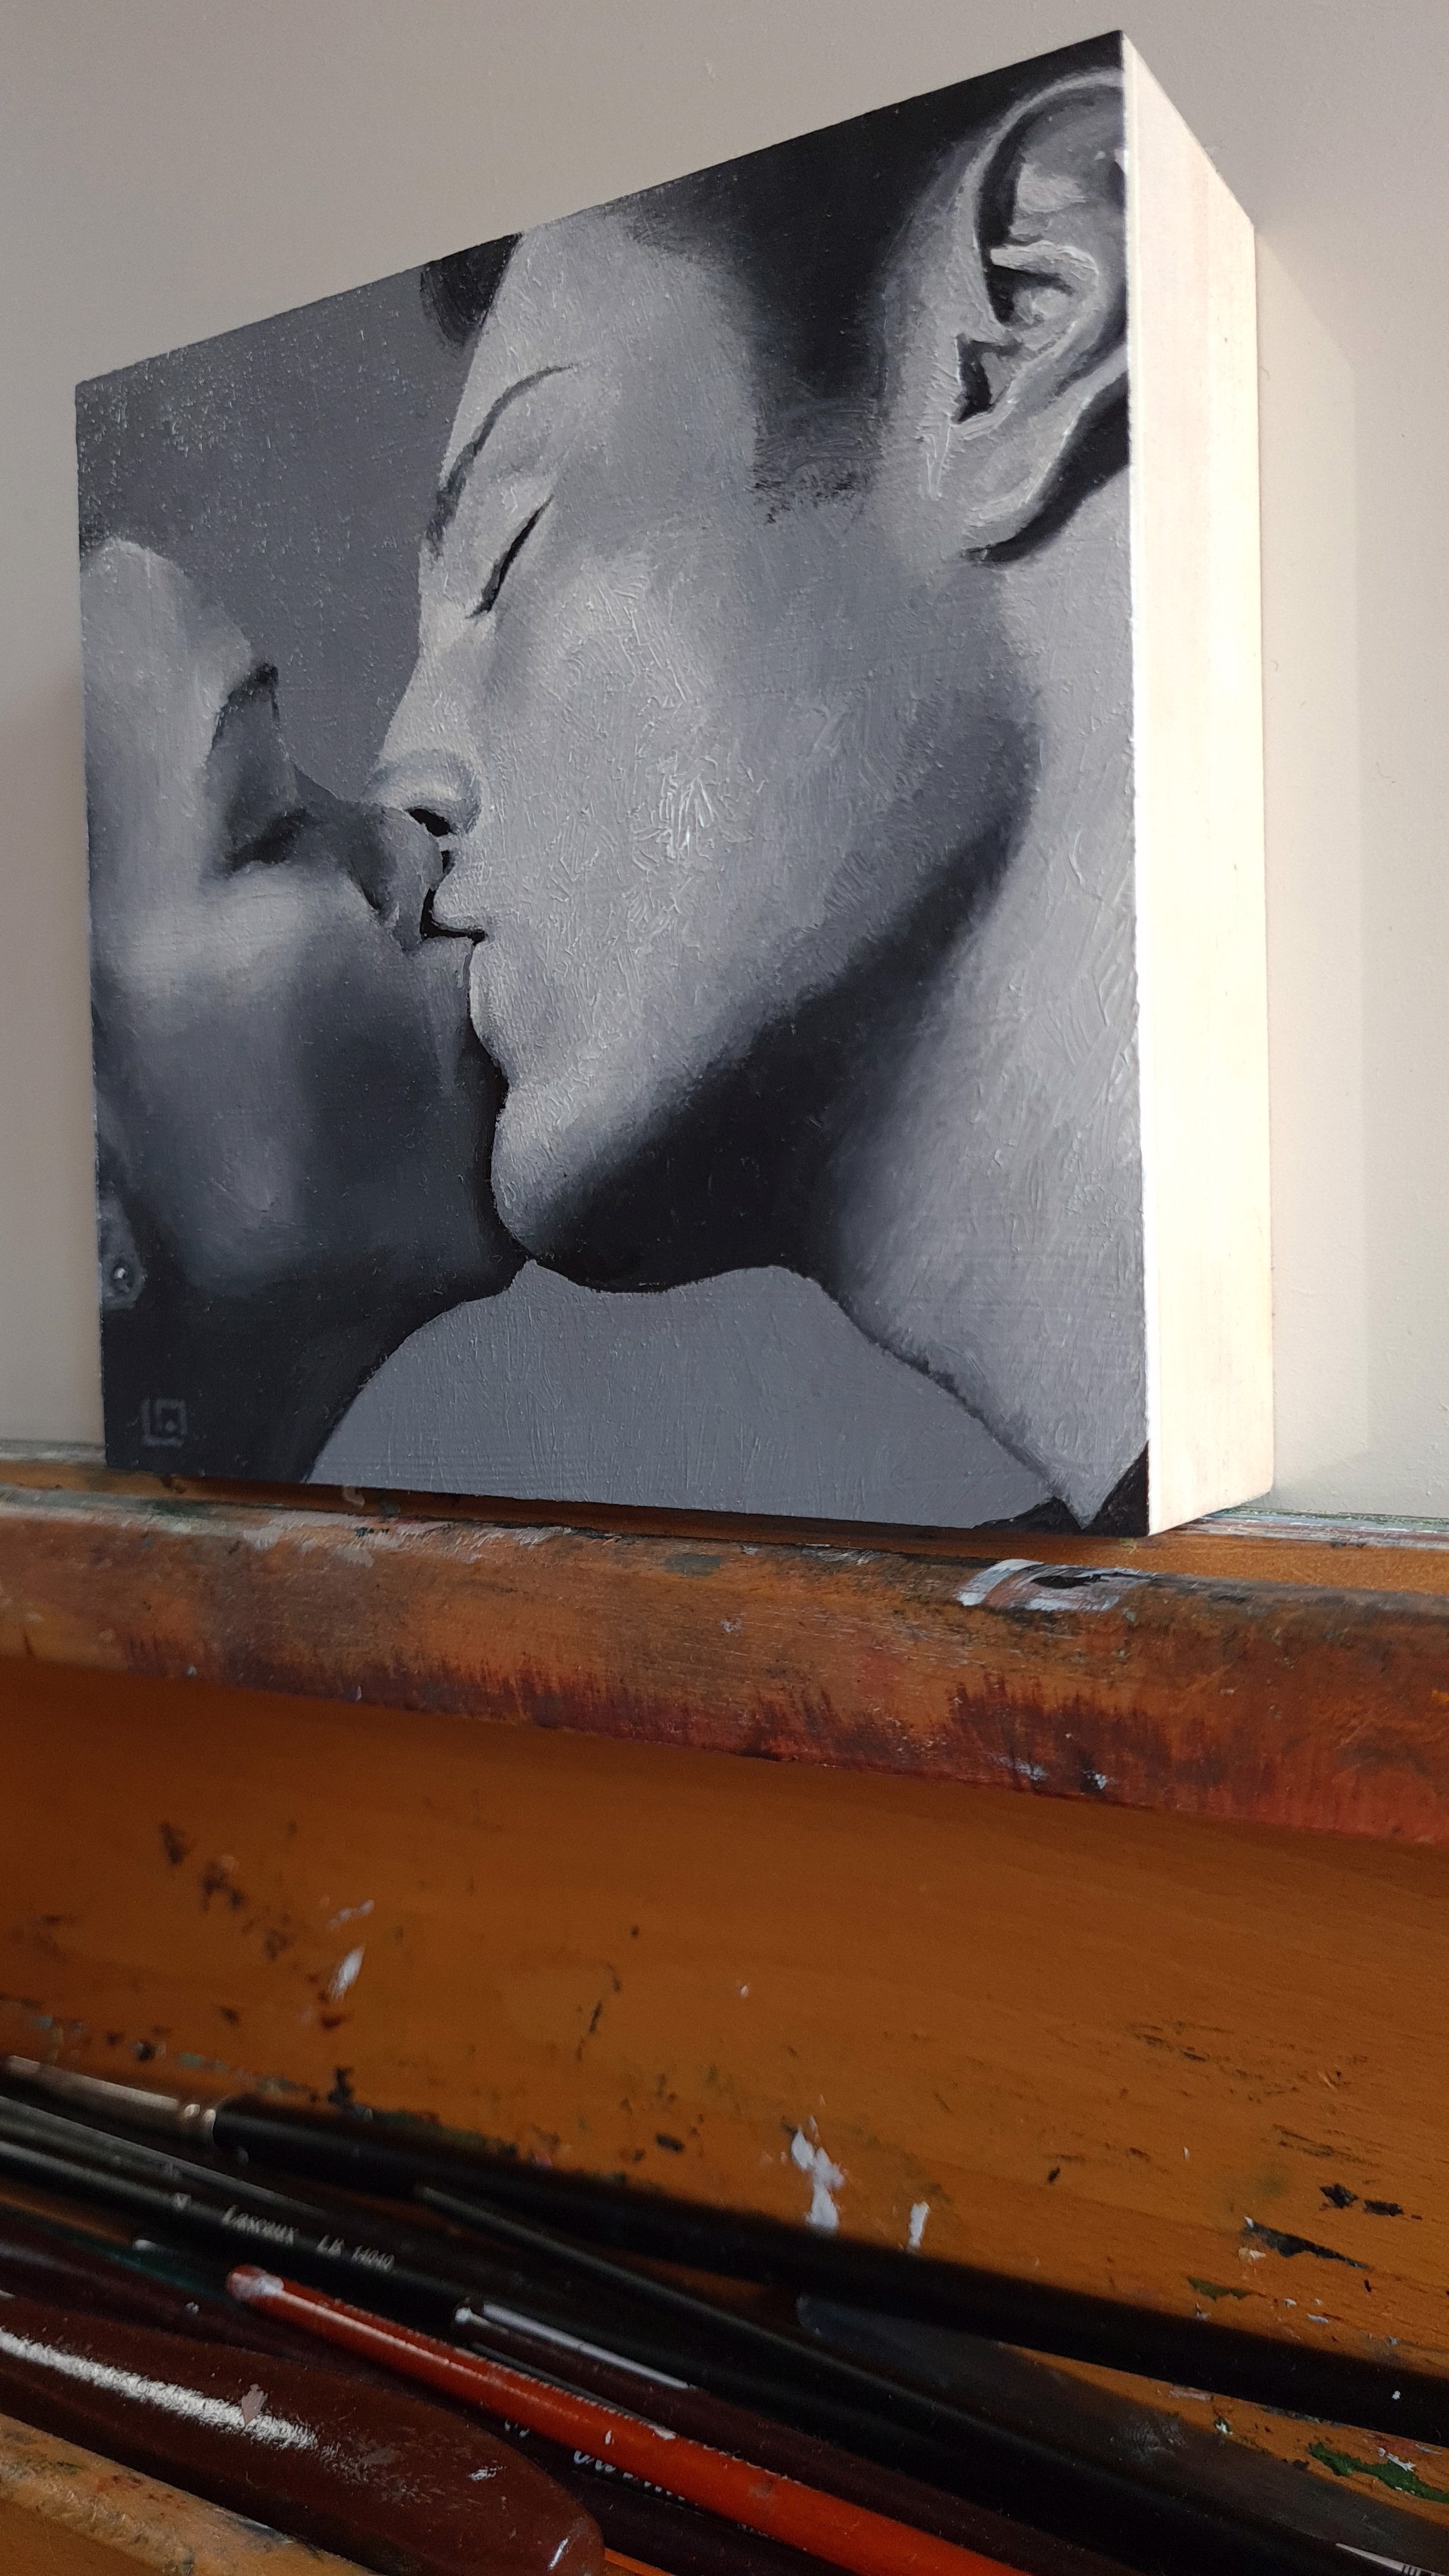 The Kiss #4 by Linda Delahaye